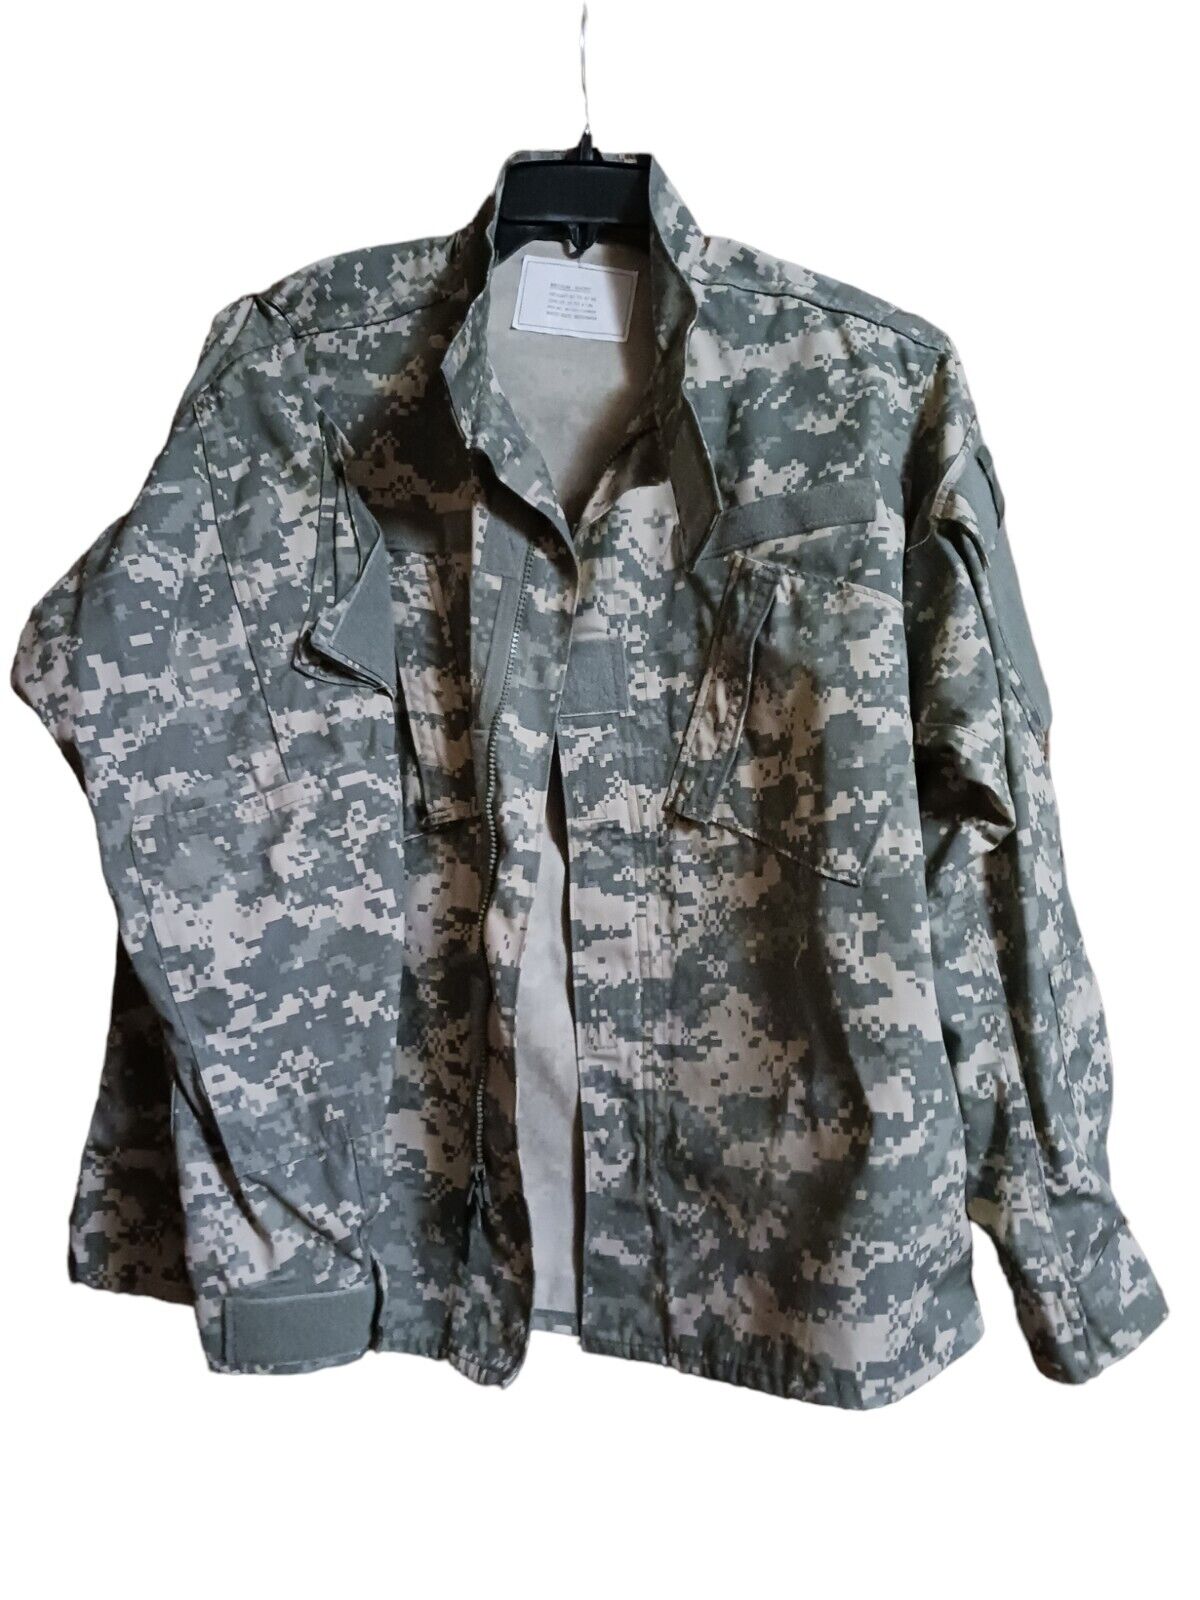 NewUS Army Military Surplus Digital Camo Combat Uniform Coat Nato Size 6070/9404